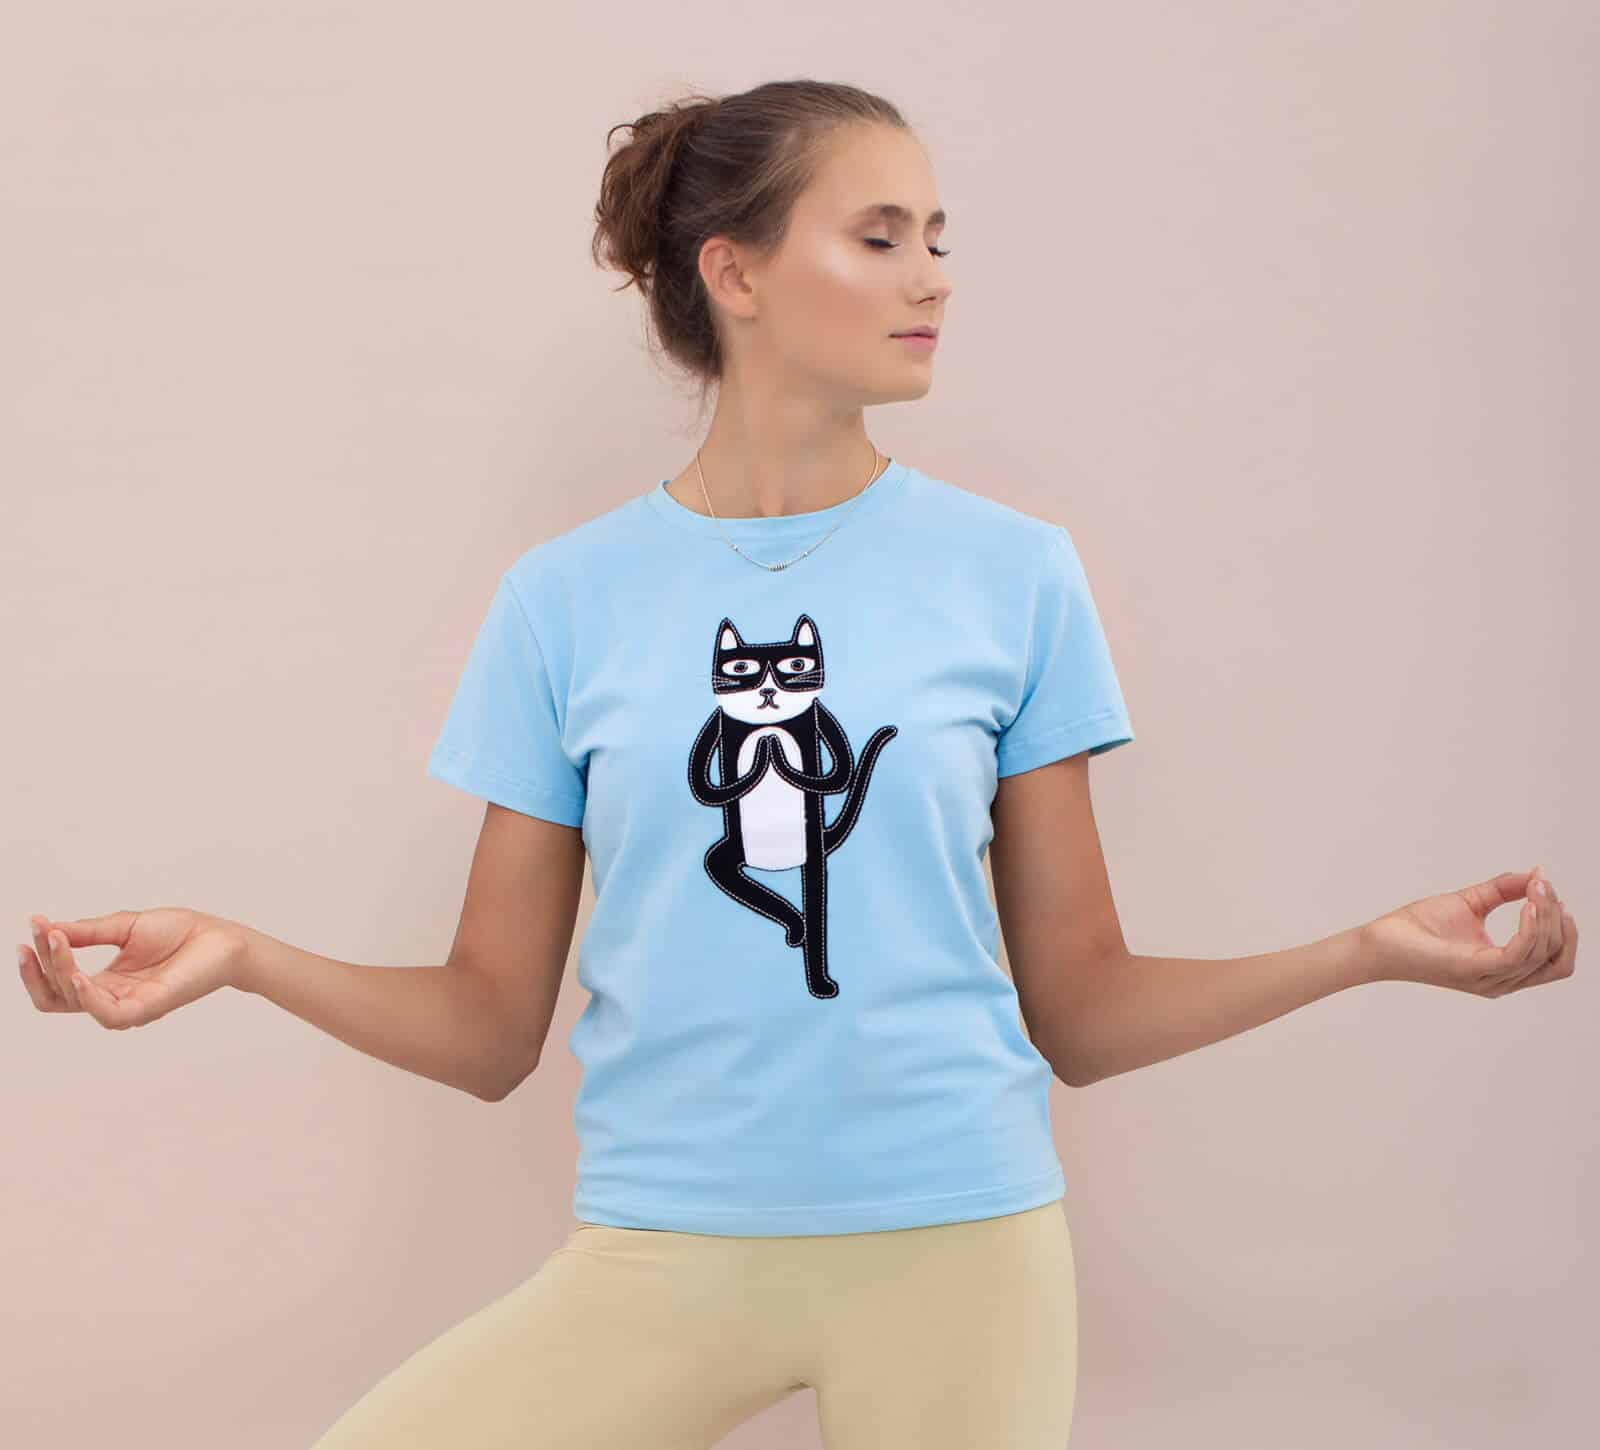 Womens Yoga Tops & T-Shirts.